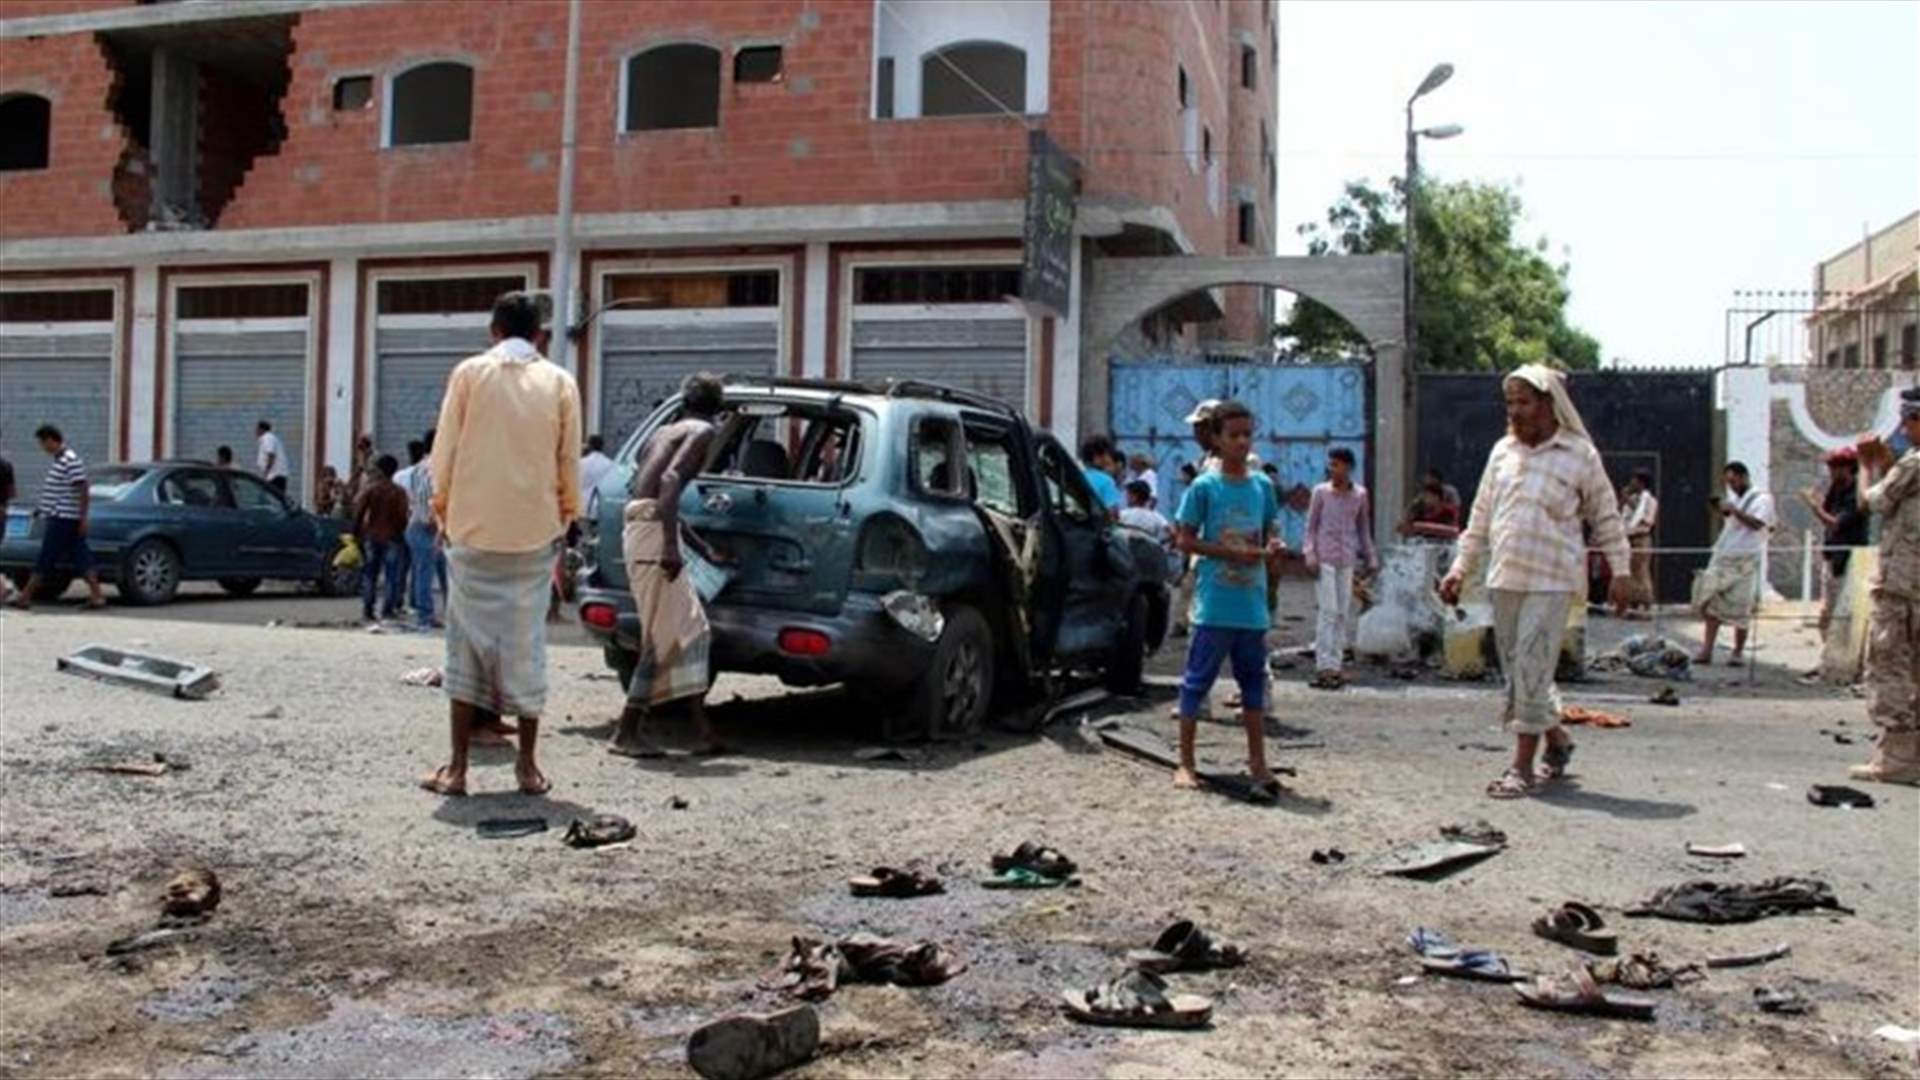 Suicide bomber kills at least 12 Yemeni troops in Aden - medic, officials